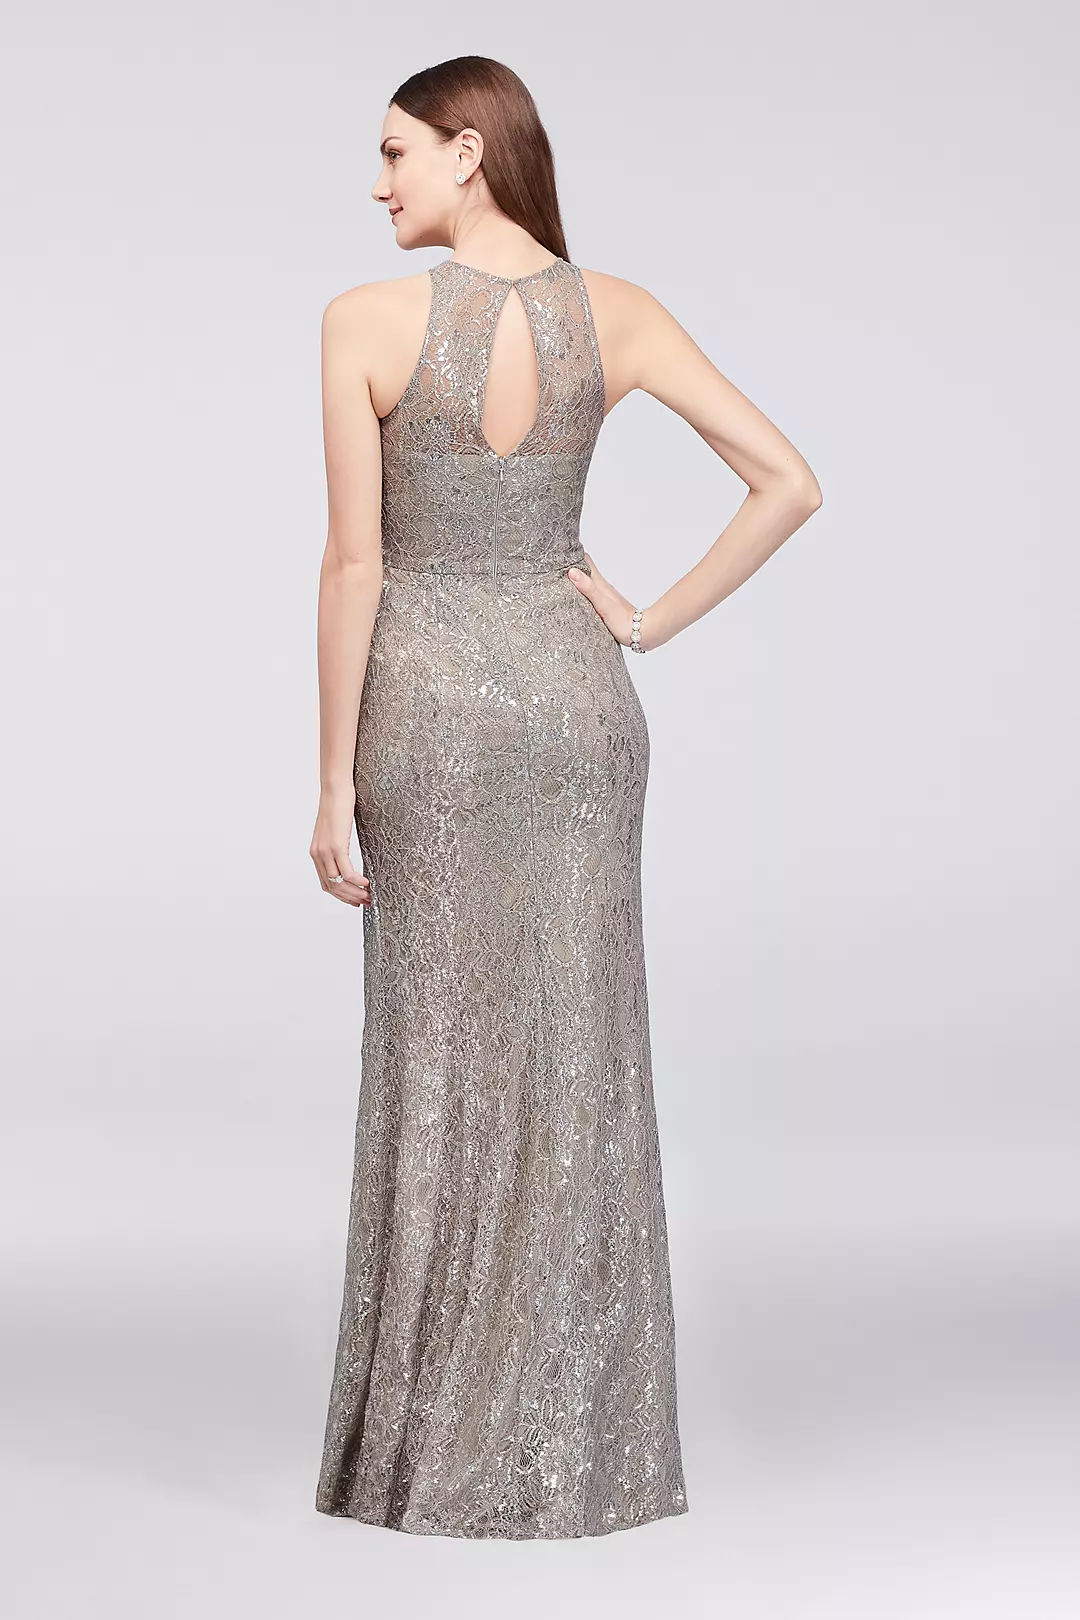 Metallic Lace Soft Sheath Dress with Waist Detail Image 2